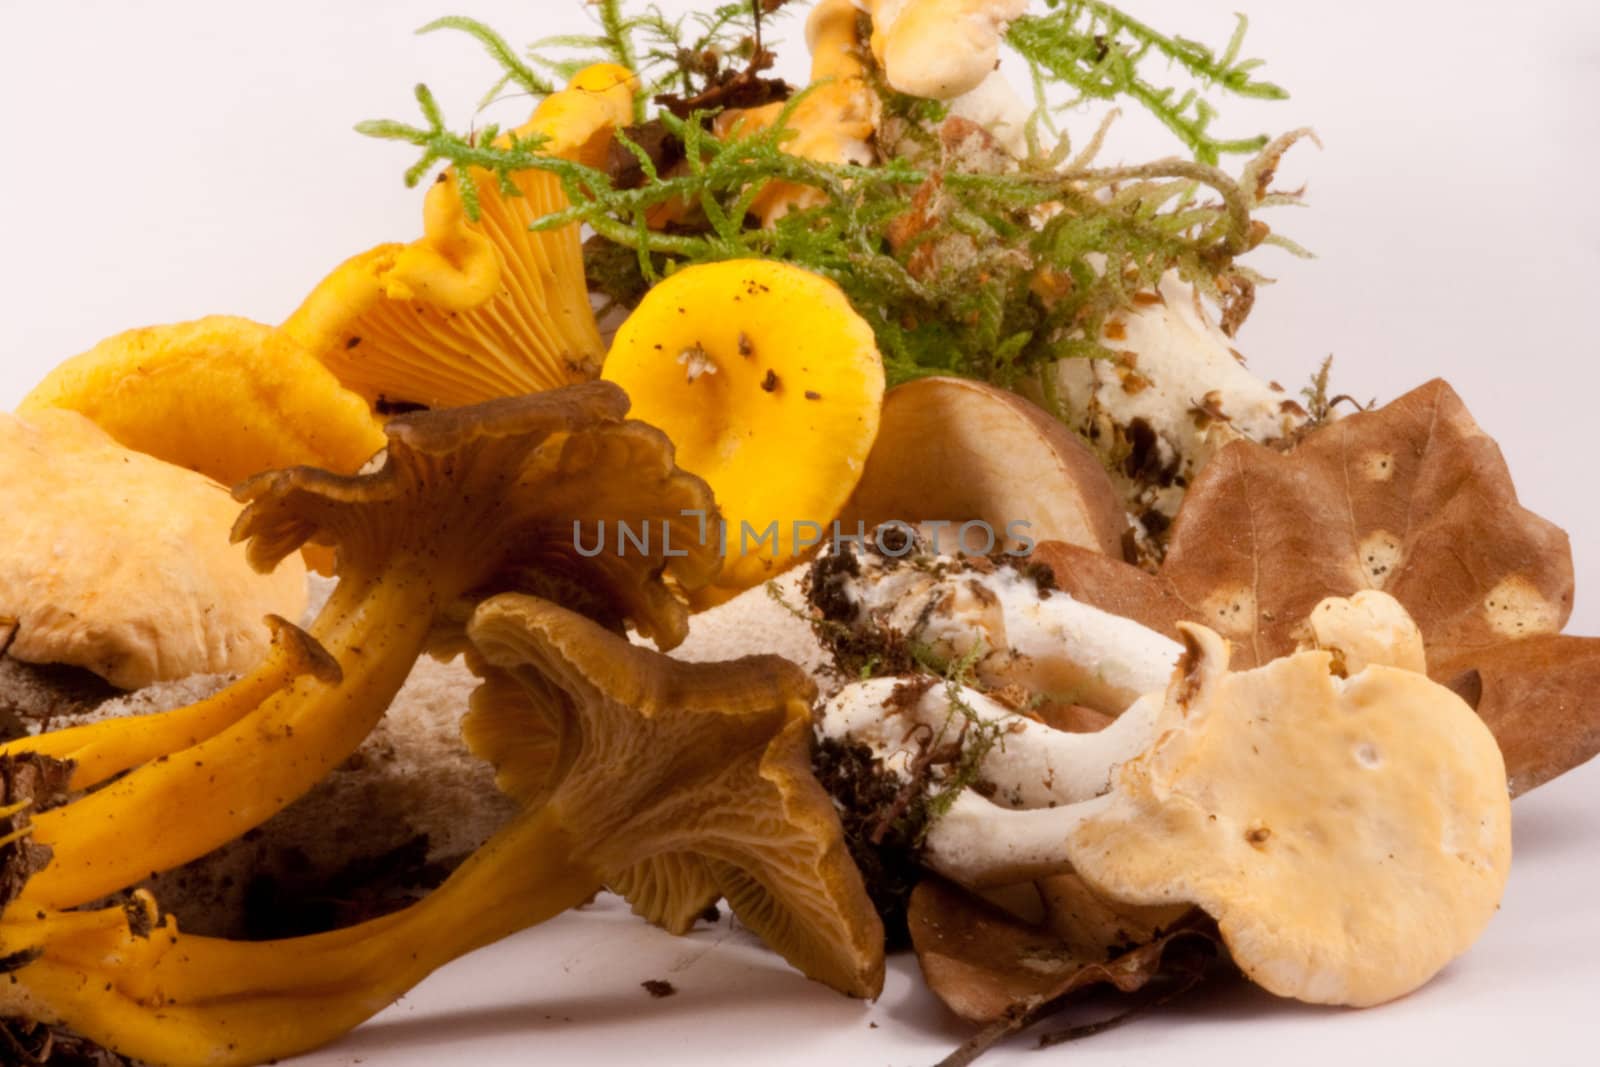 Collection of wild edible fungi.